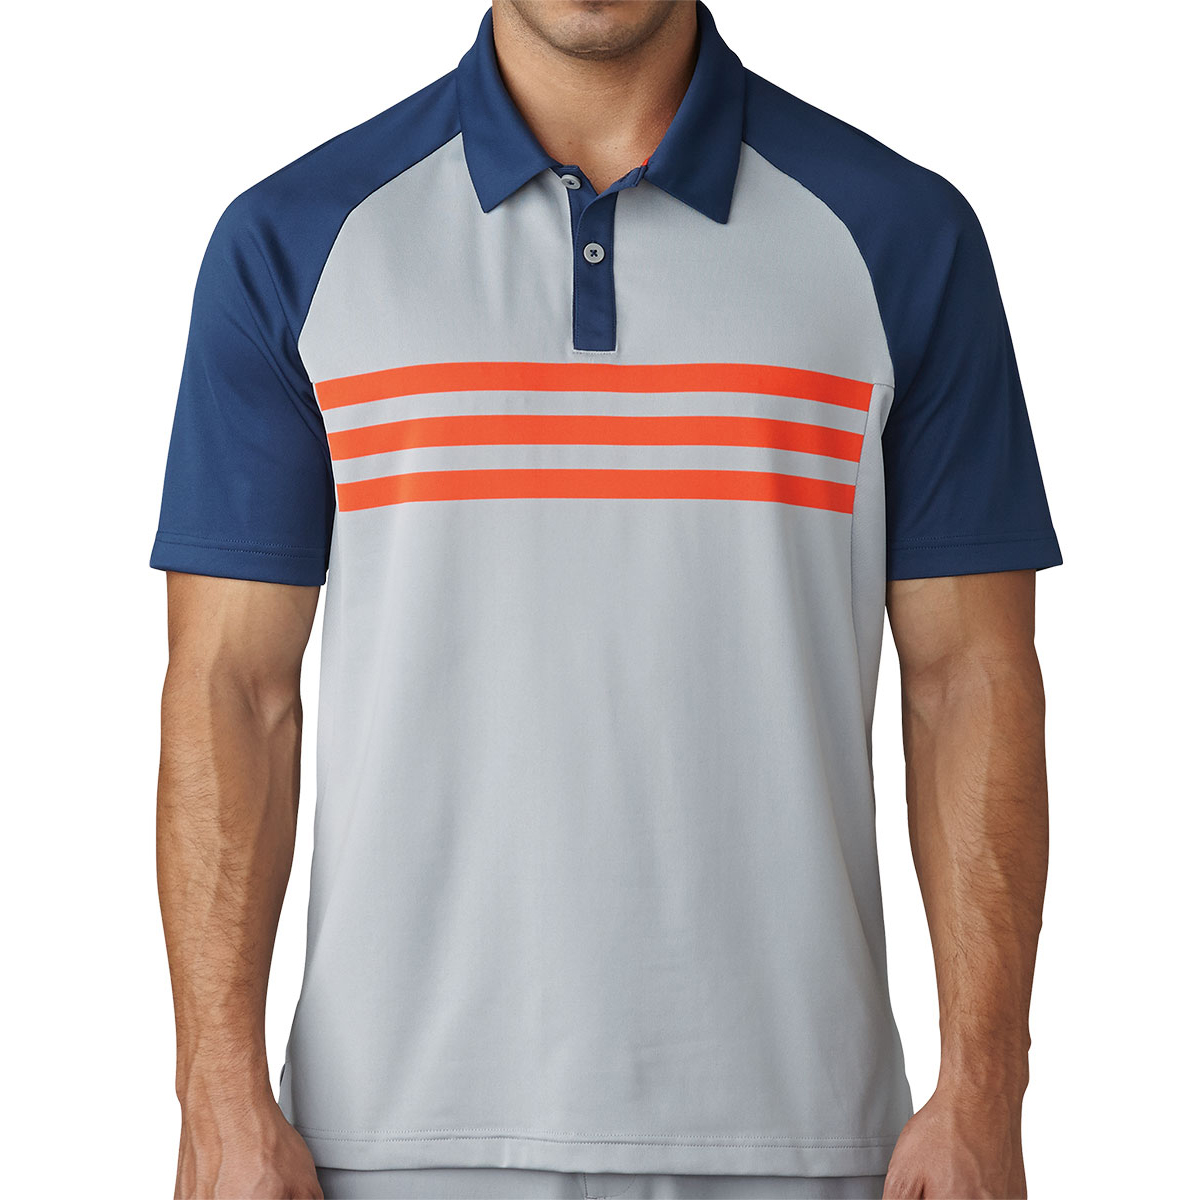 adidas climacool 3 stripes golf polo shirt